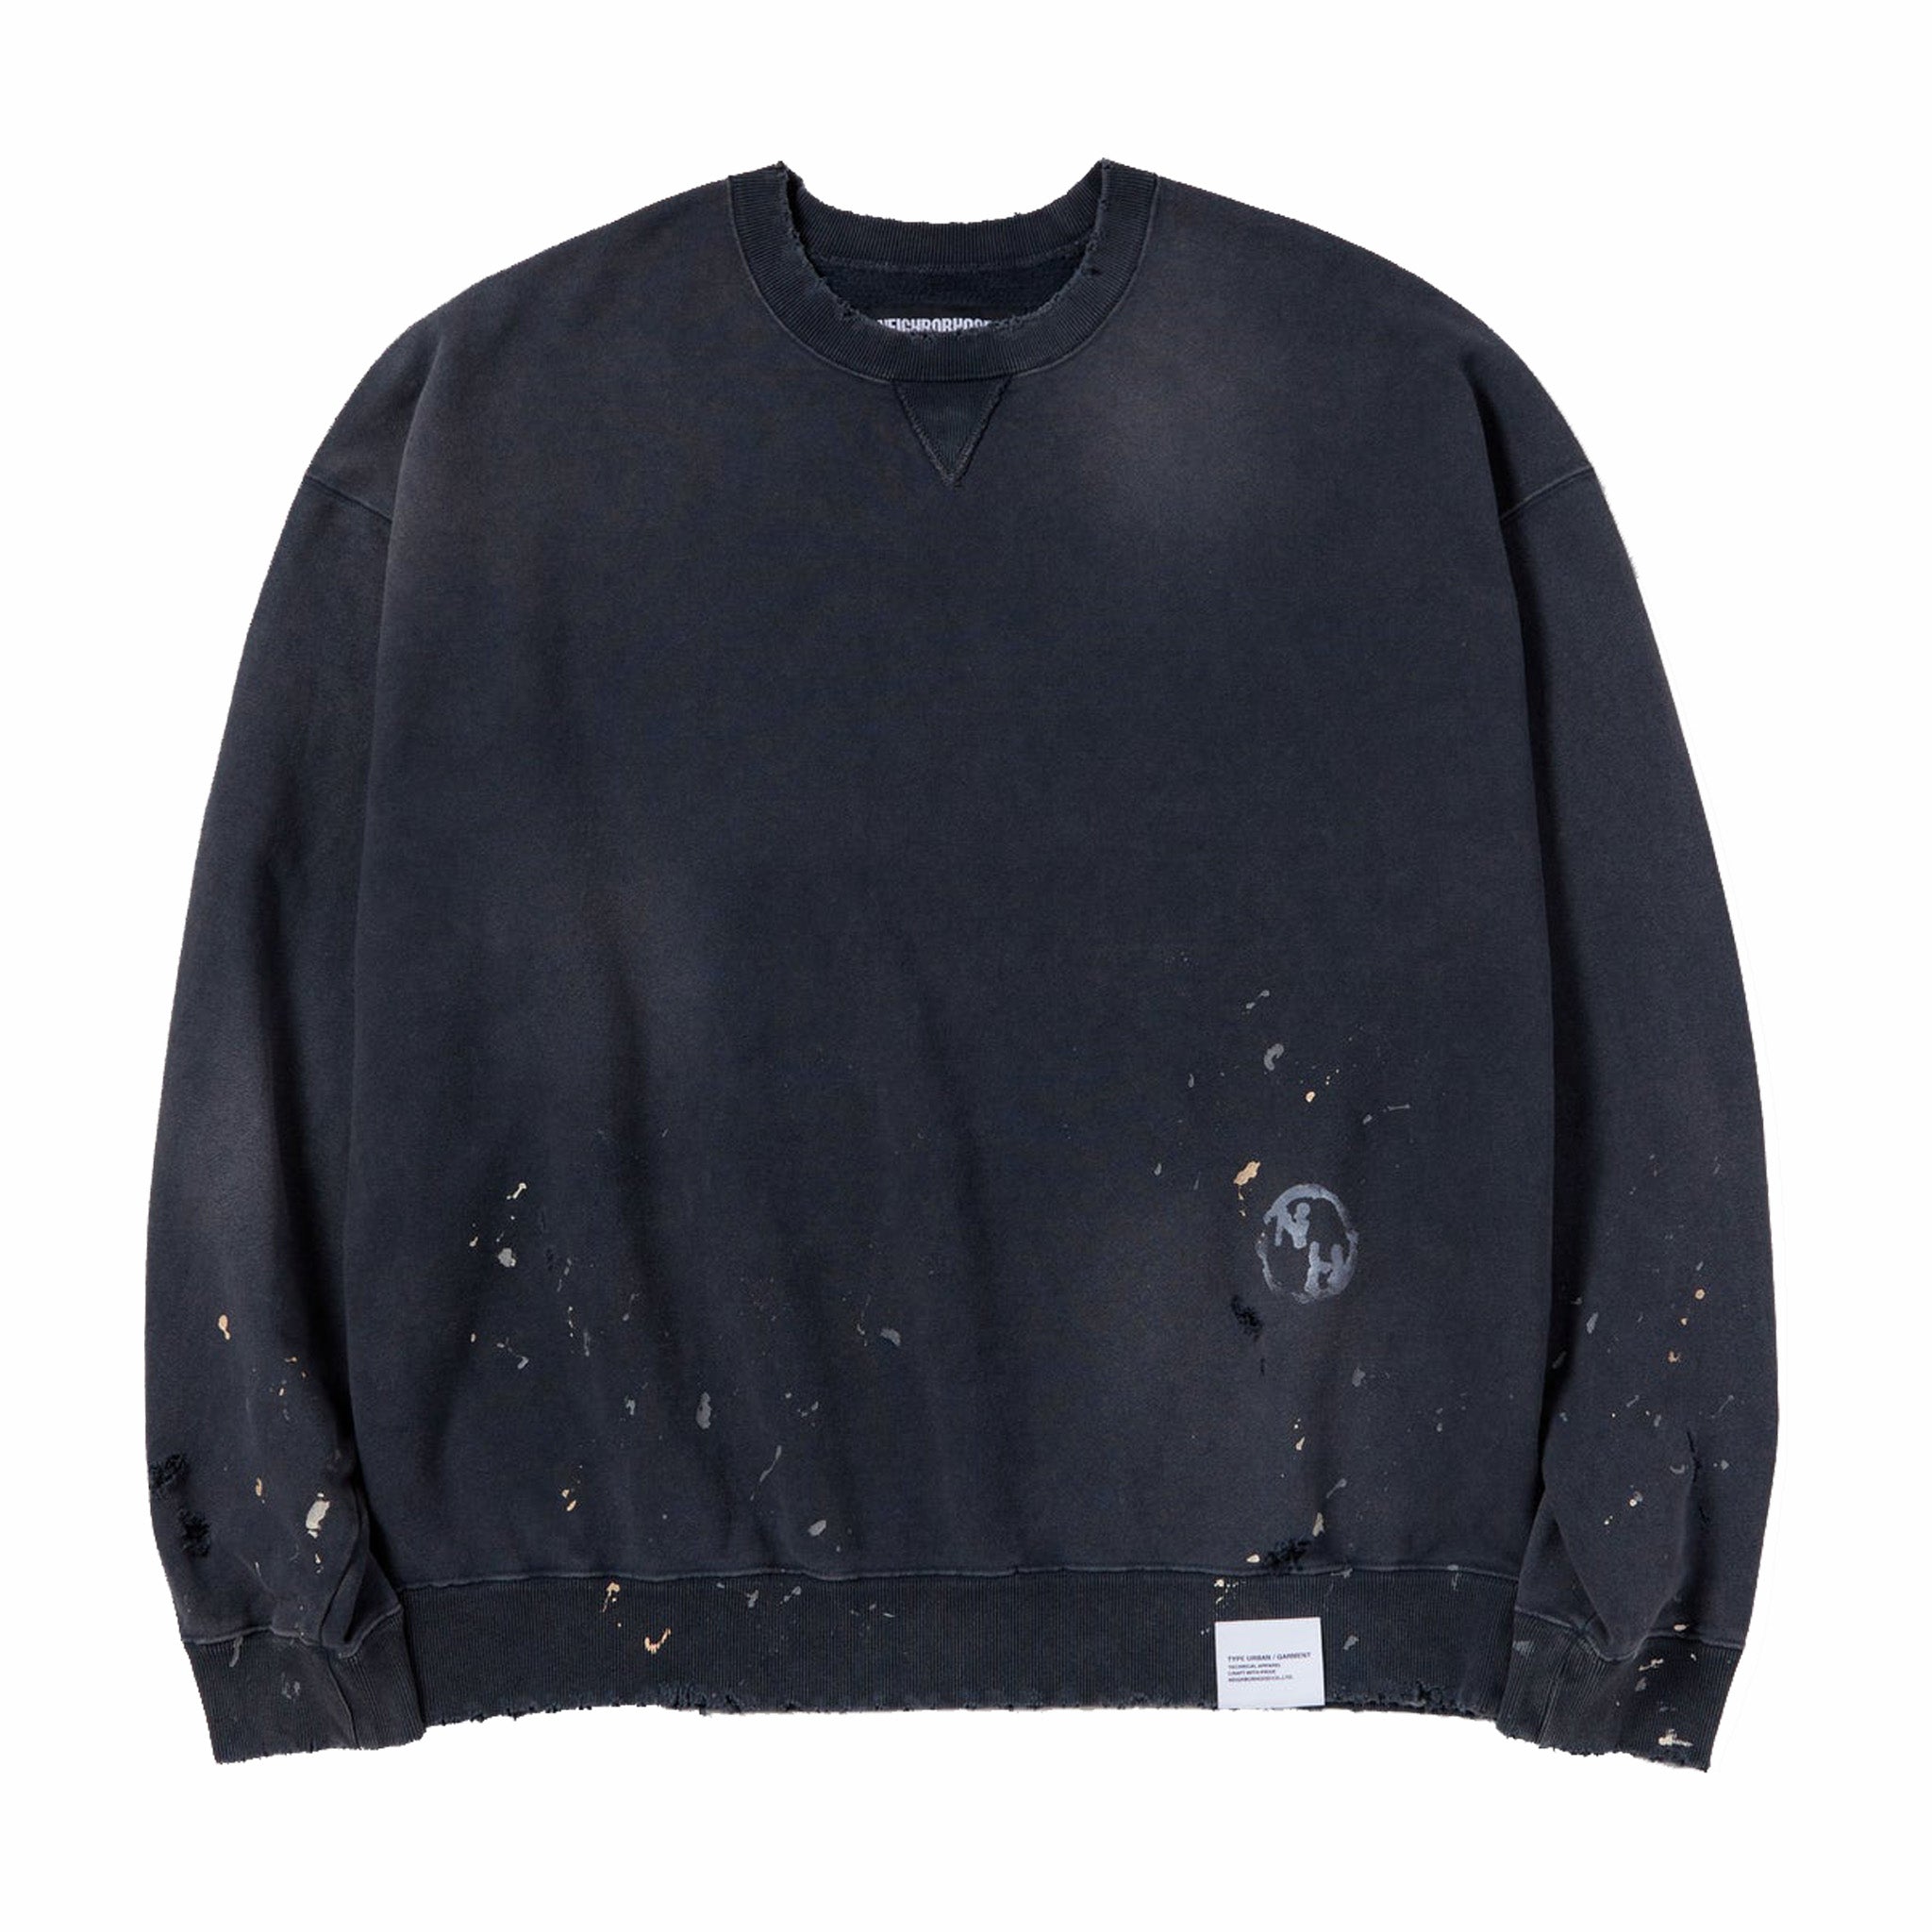 Neighborhood Damage Sweatshirt LS (Black) - August Shop